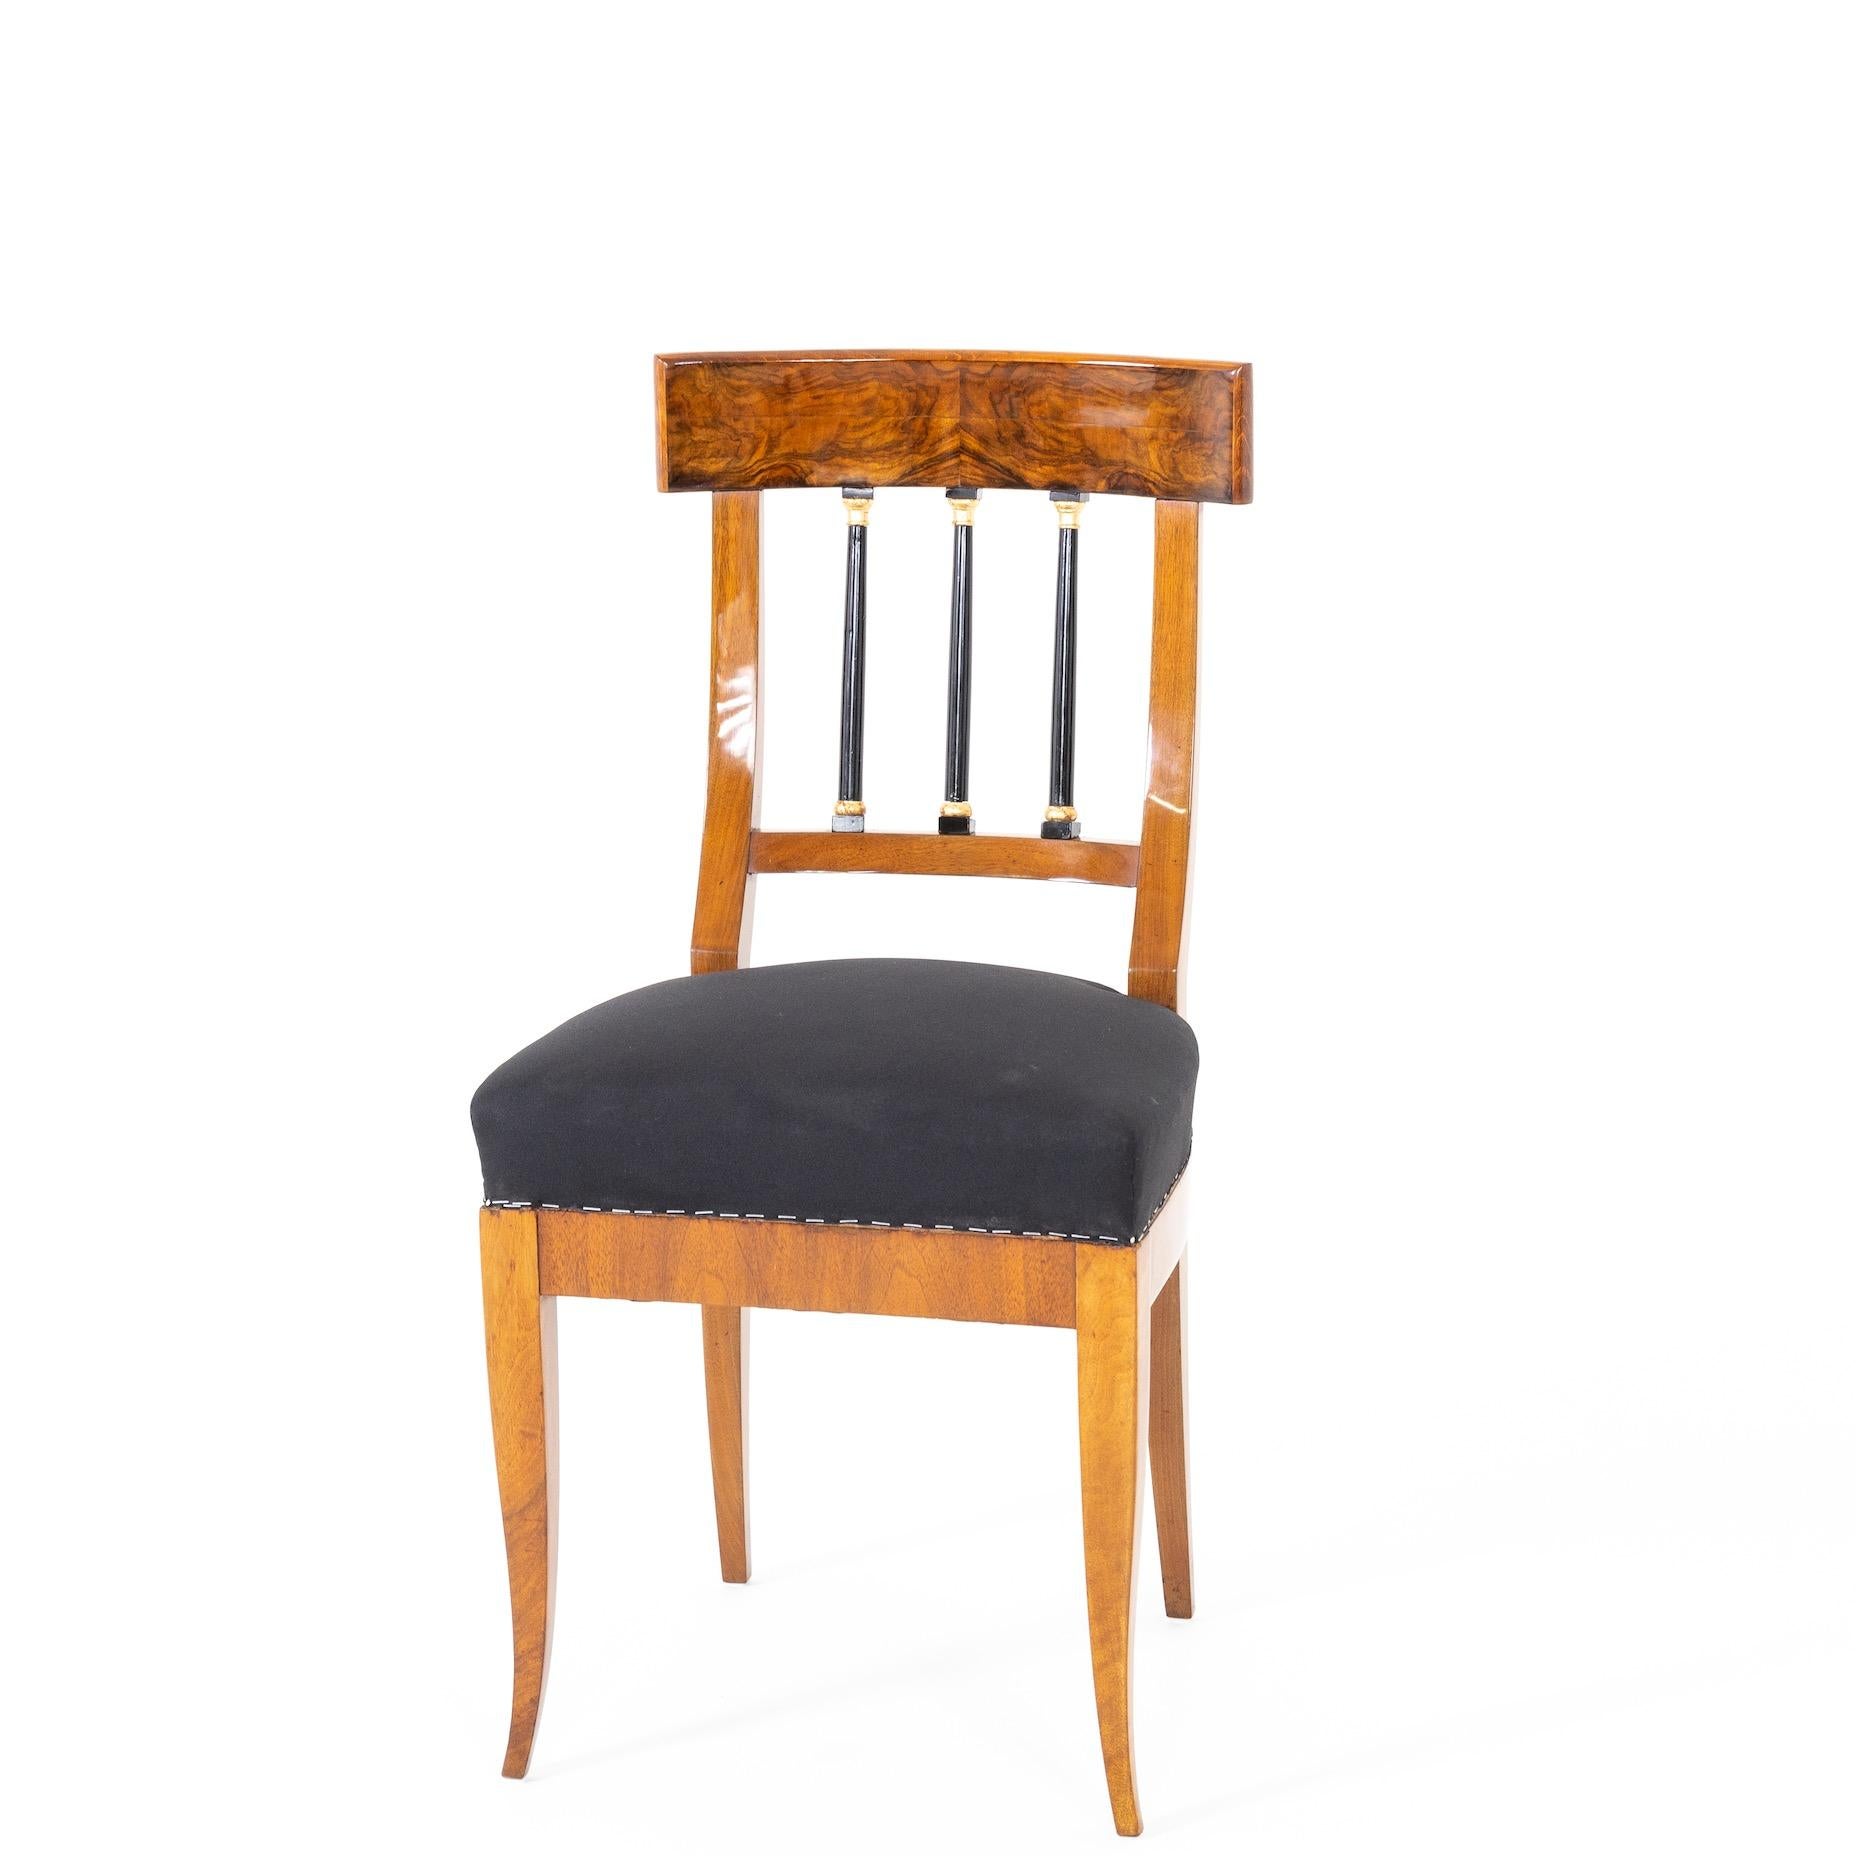 German Biedermeier Chair, around 1820